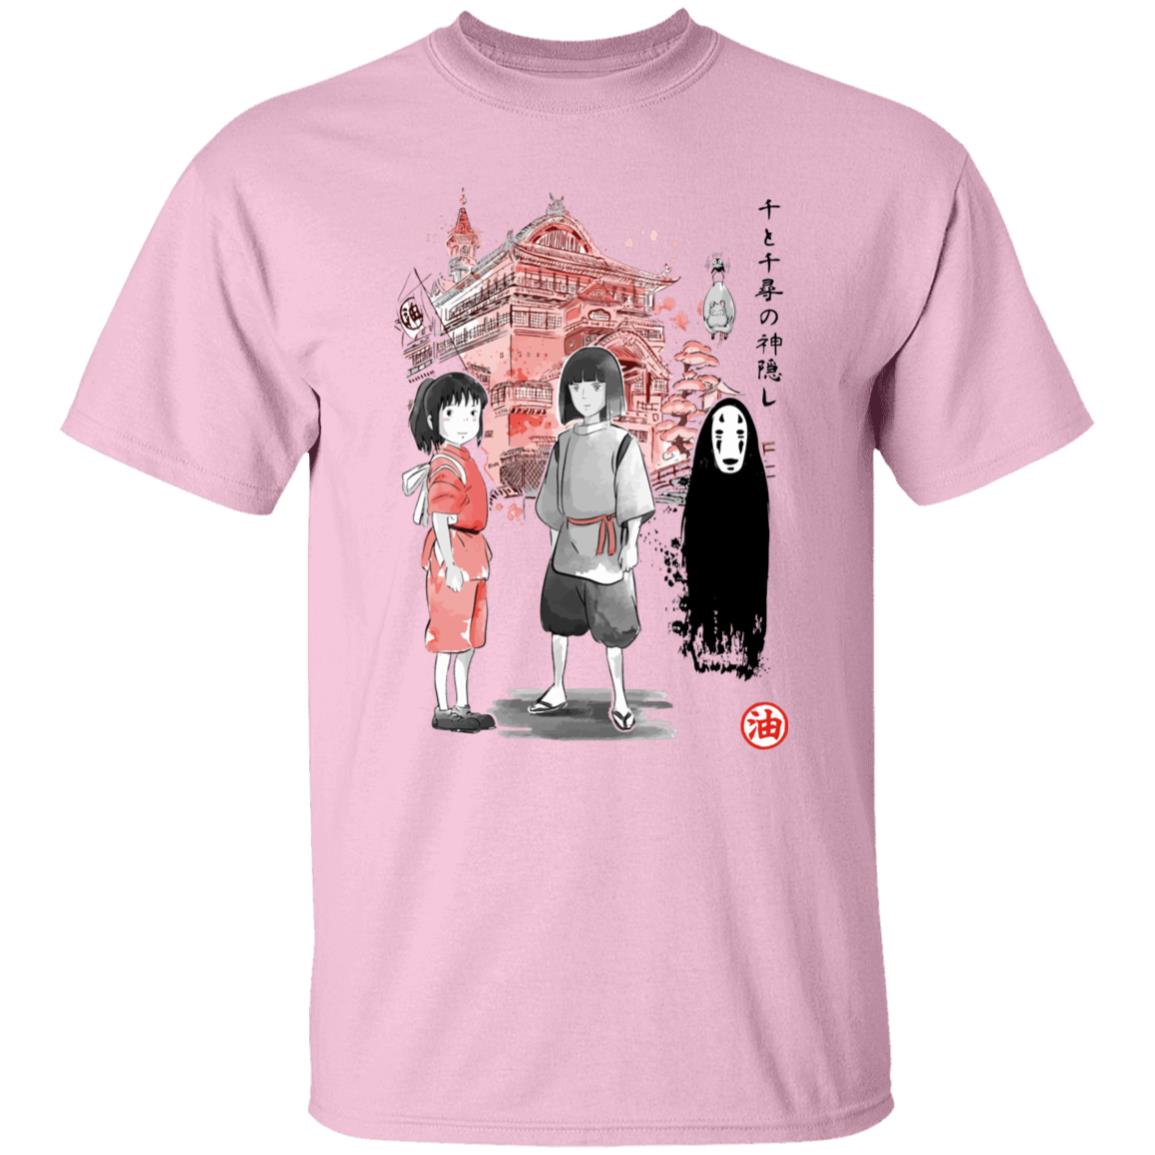 Spirited Away – Sen and Friends by the Bathhouse T Shirt Ghibli Store ghibli.store